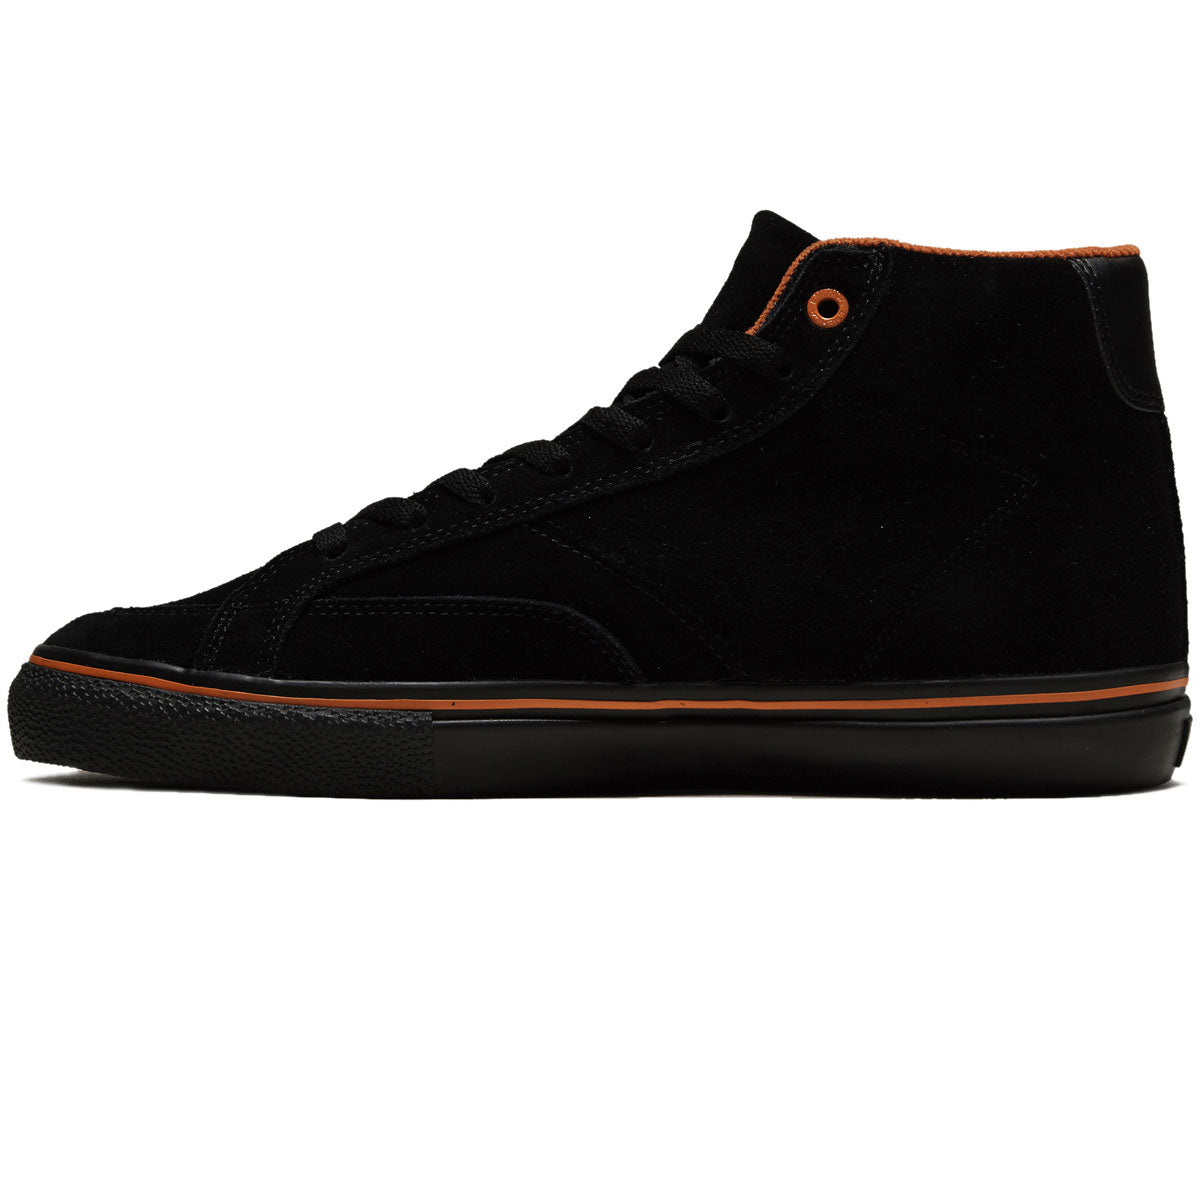 Emerica x Biltwell Omen High Shoes - Black image 2